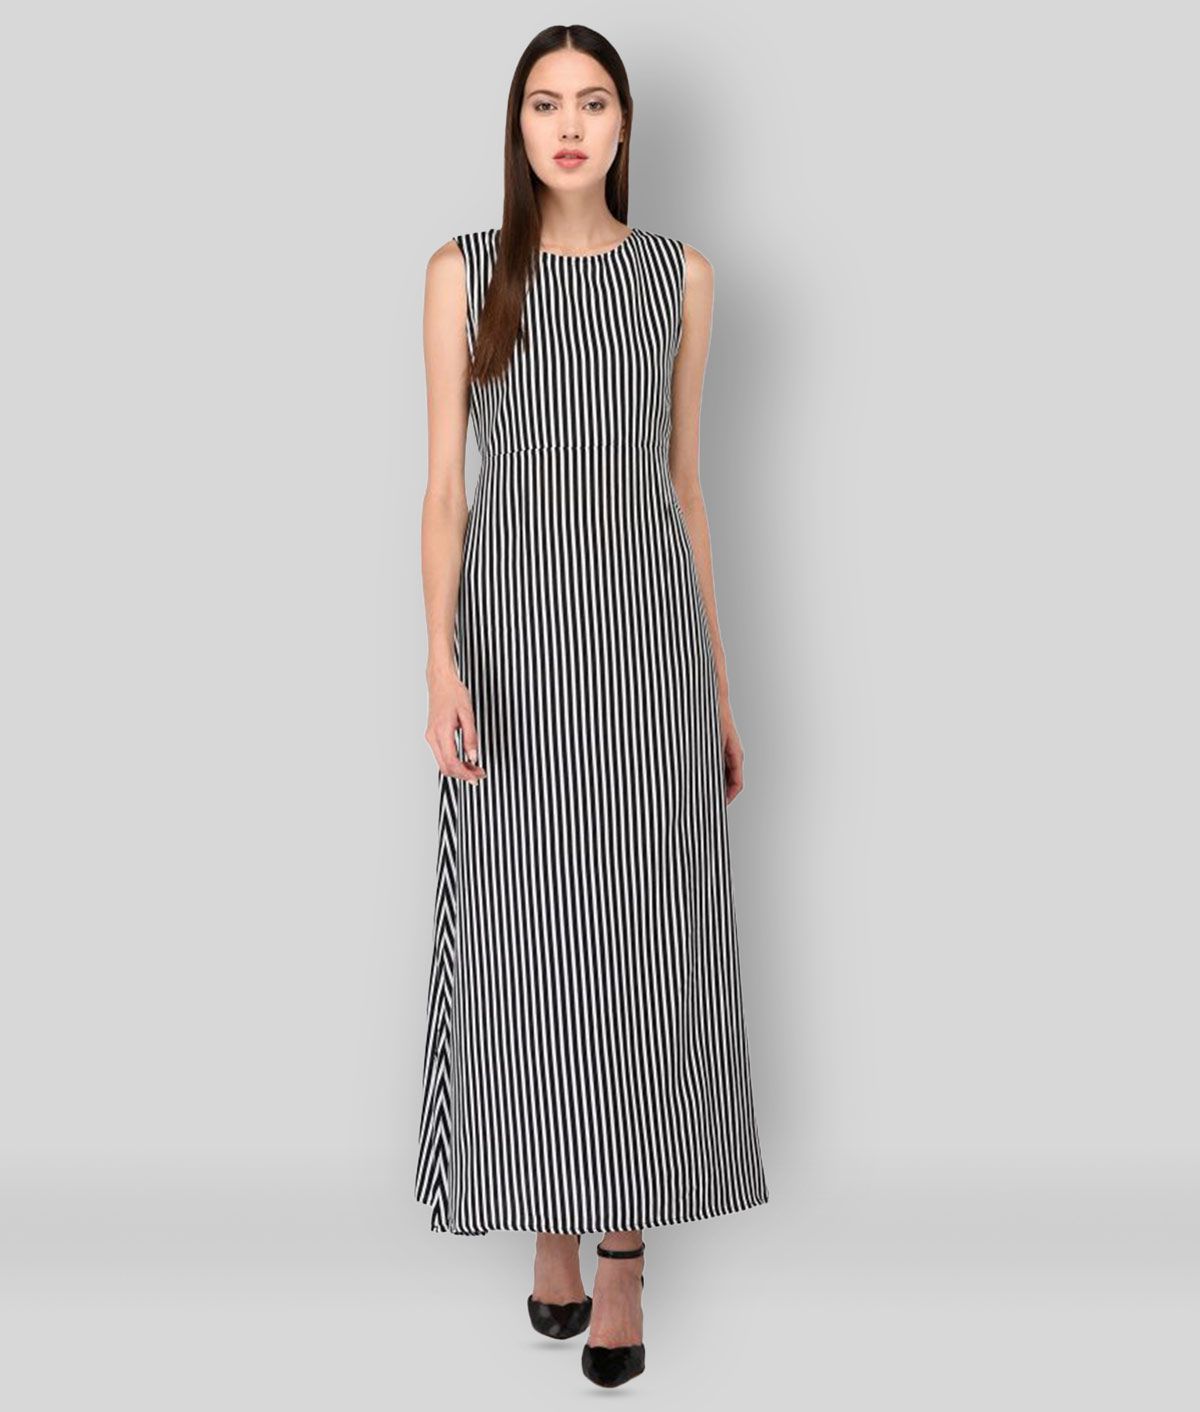 Triraj - Multicolor Polyester Blend Women's A- line Dress ( Pack of 1 )